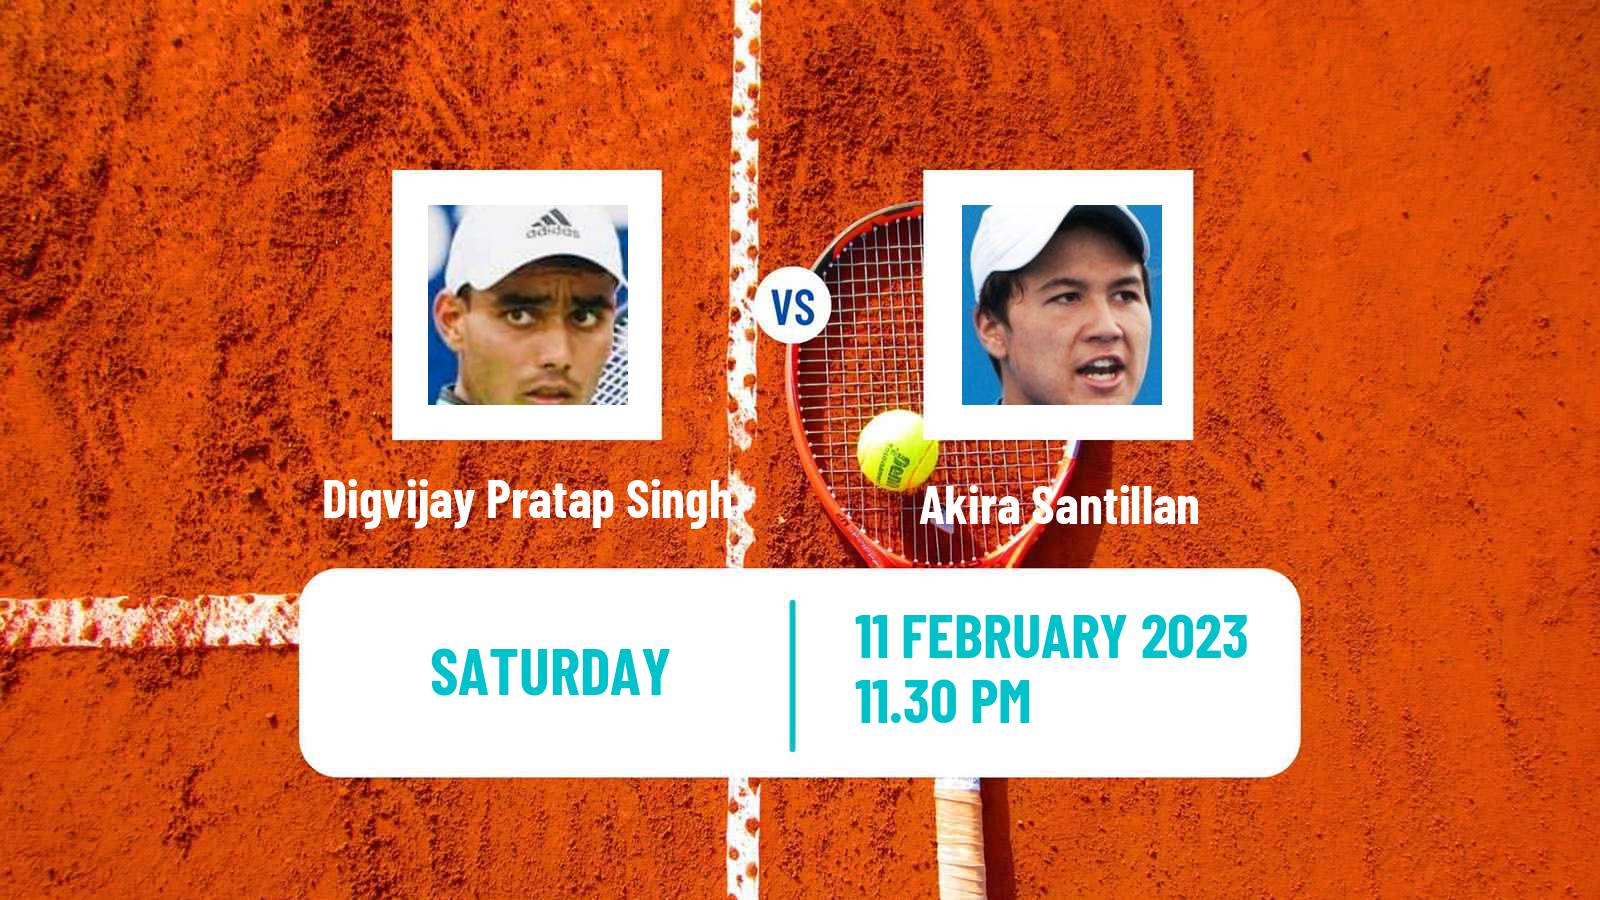 Tennis ATP Challenger Digvijay Pratap Singh - Akira Santillan